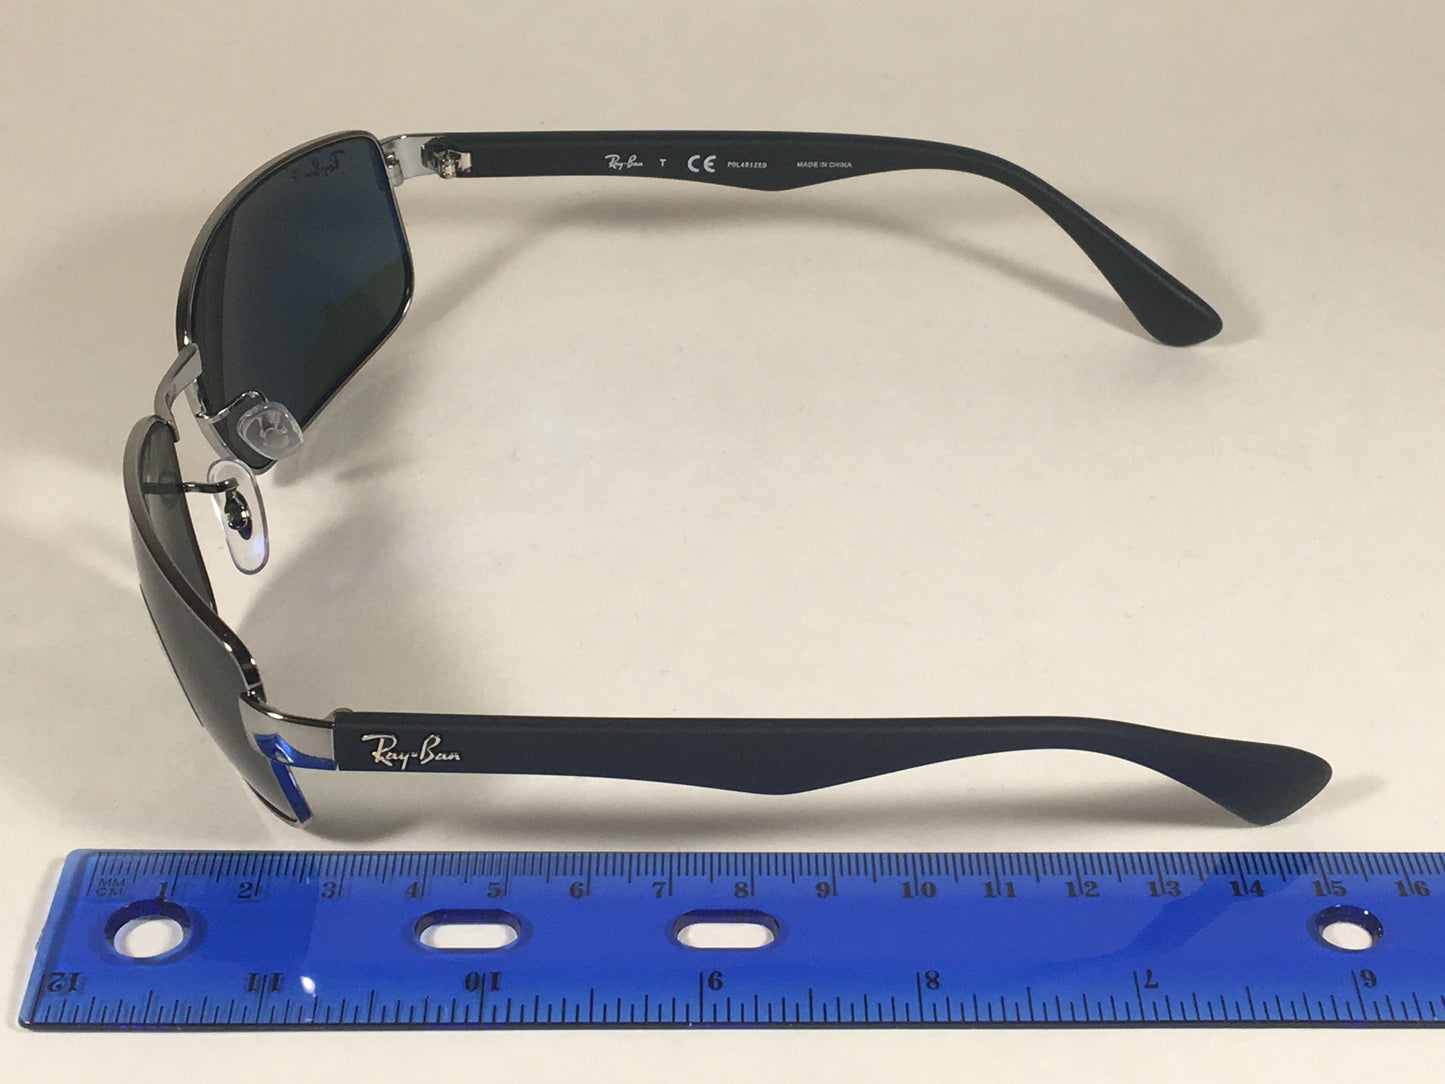 Ray-Ban Polarized Rectangle Sunglasses Gunmetal Matte Black Frame Gray Green Lens RB3478 004/58 - Sunglasses